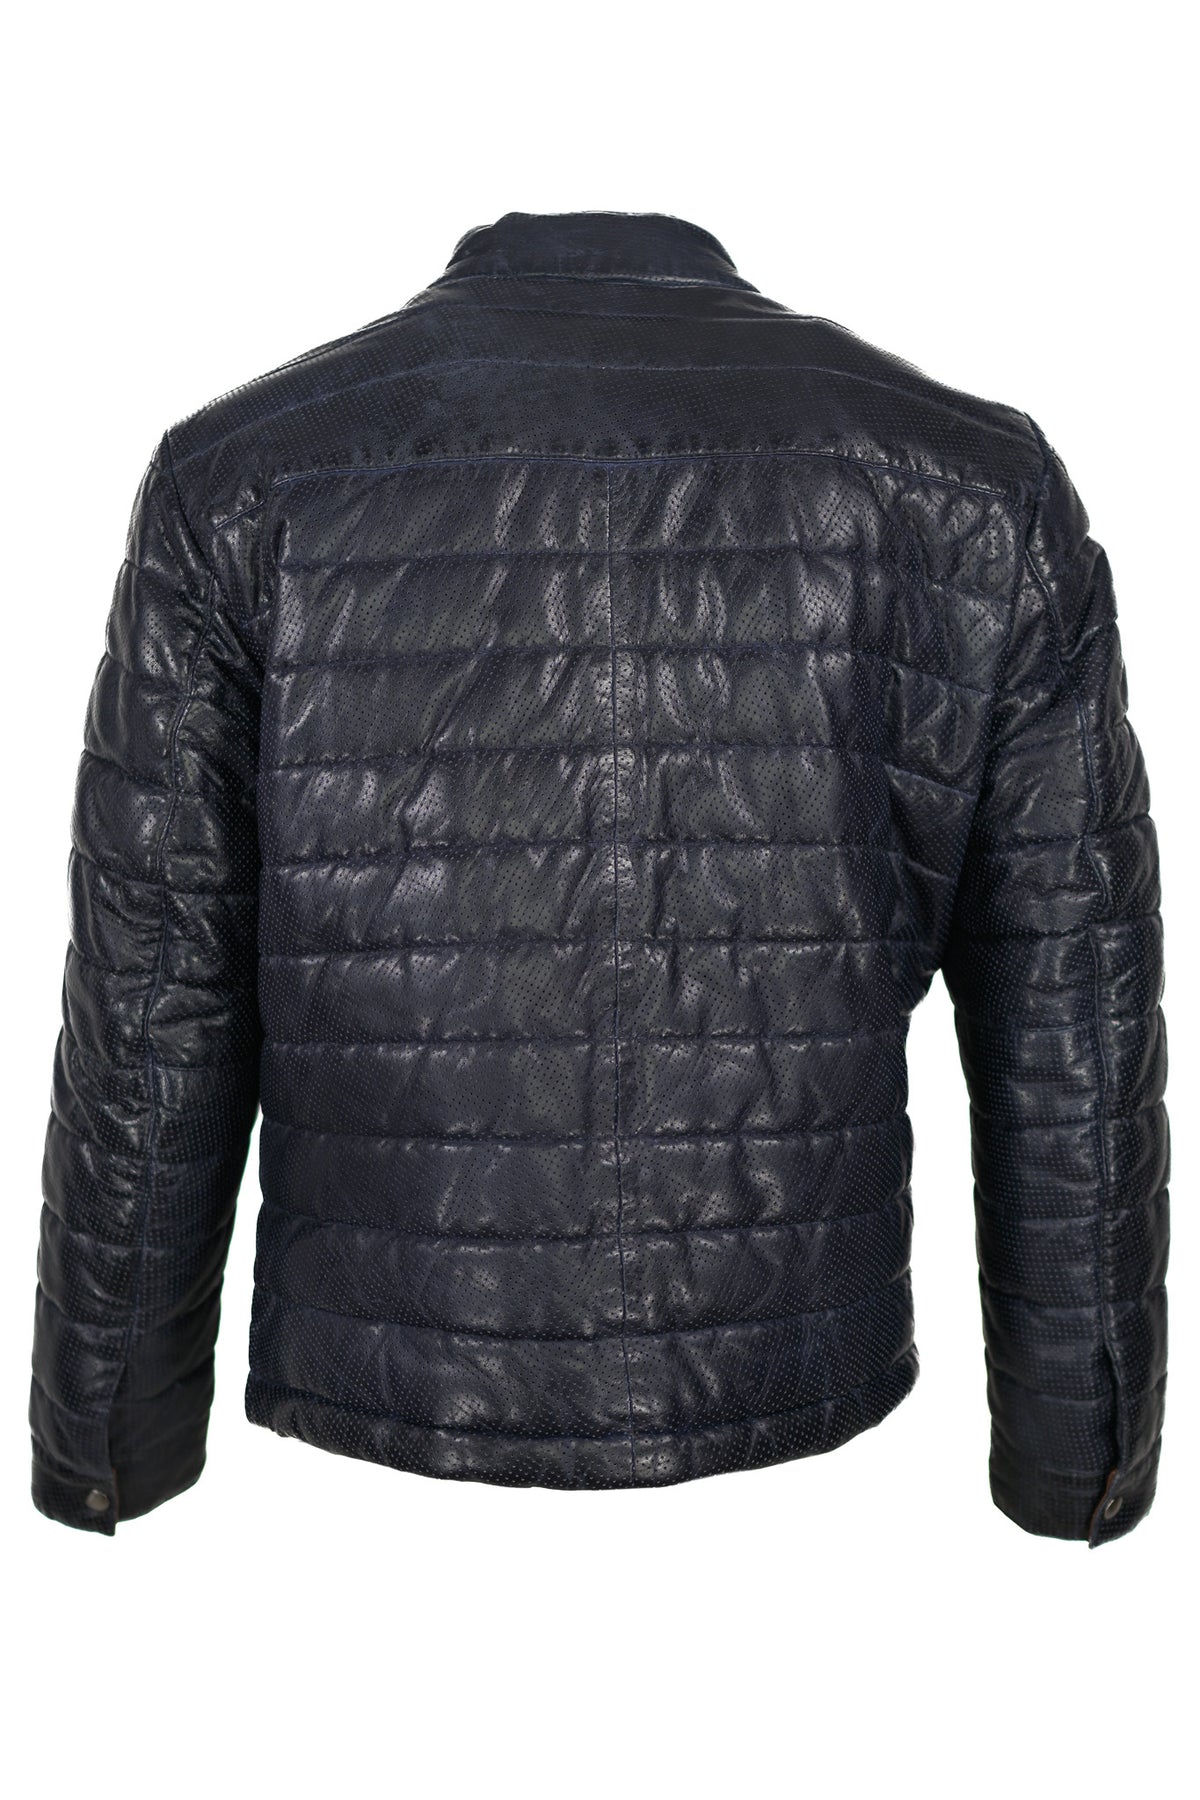 Alberto Zimni Missani Leather Jacket